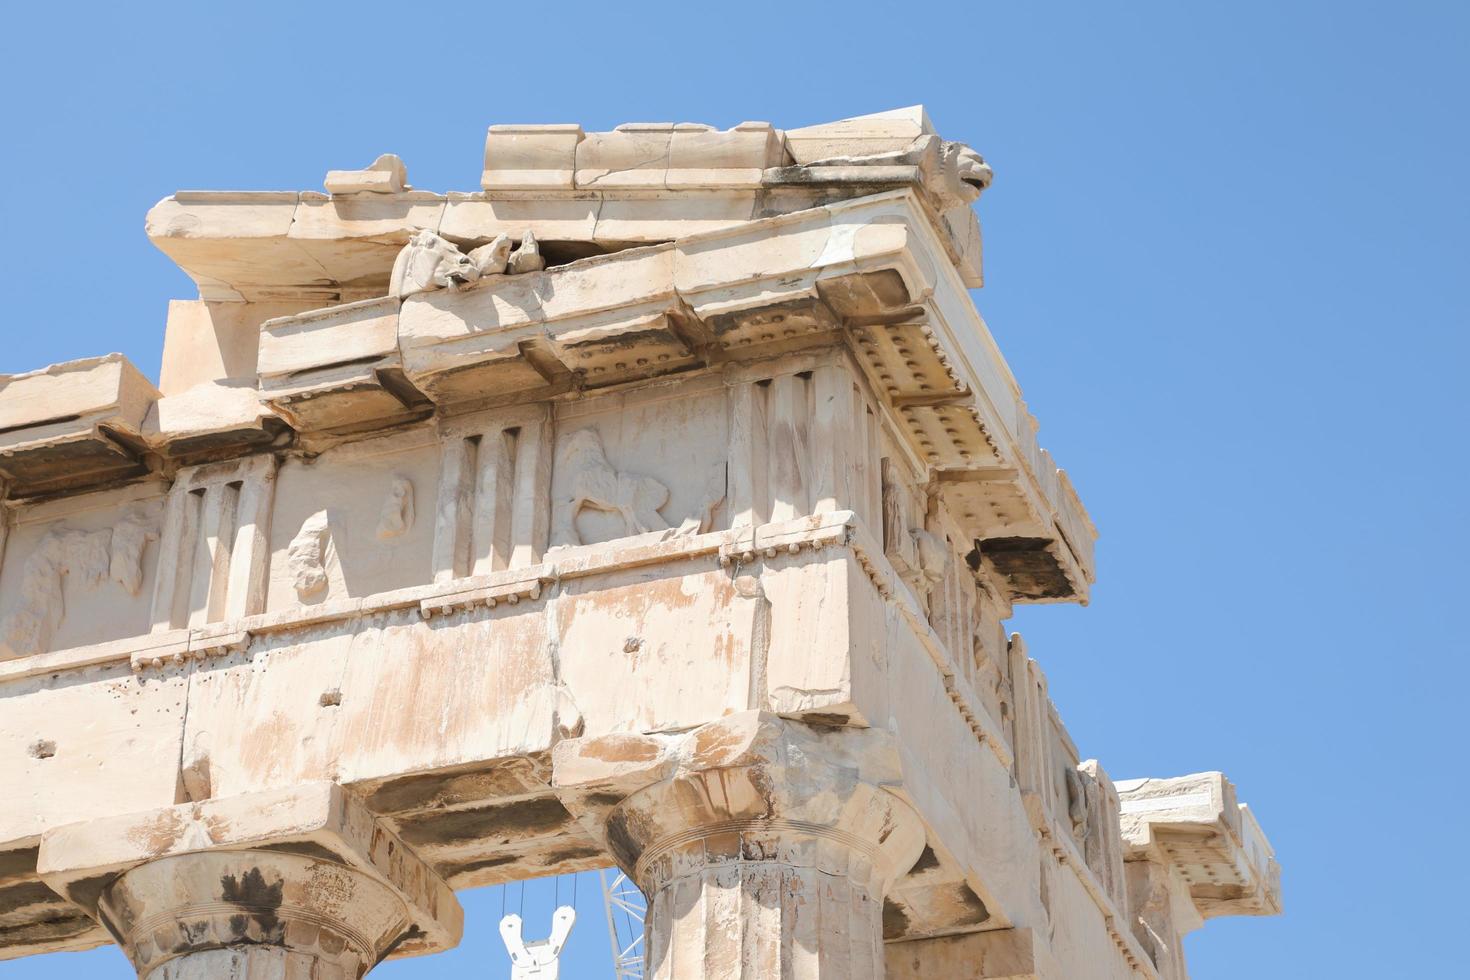 parthenon tempel op de akropolis van athene, griekenland foto